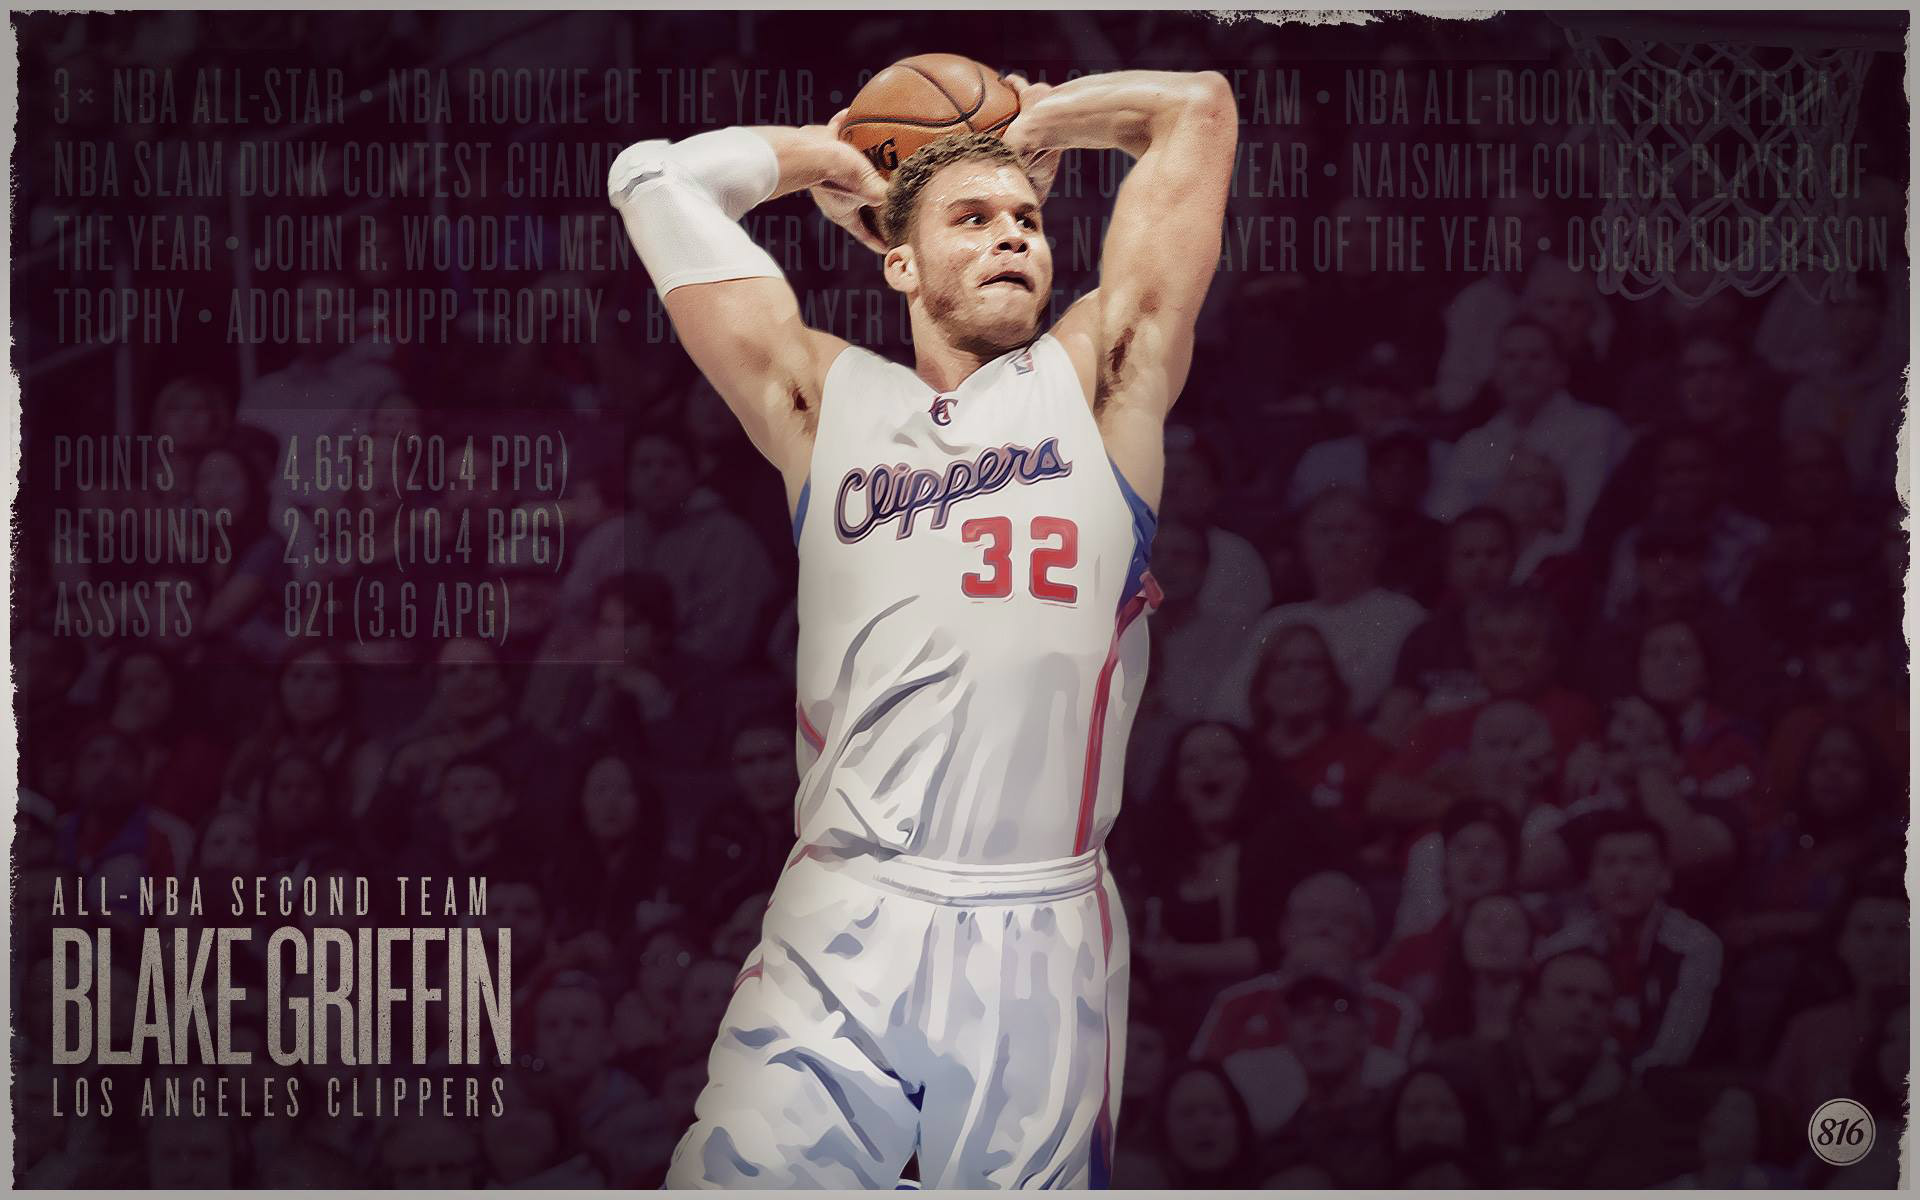 1920x1200 Blake Griffin 2013 All-NBA Second Team  Wallpaper